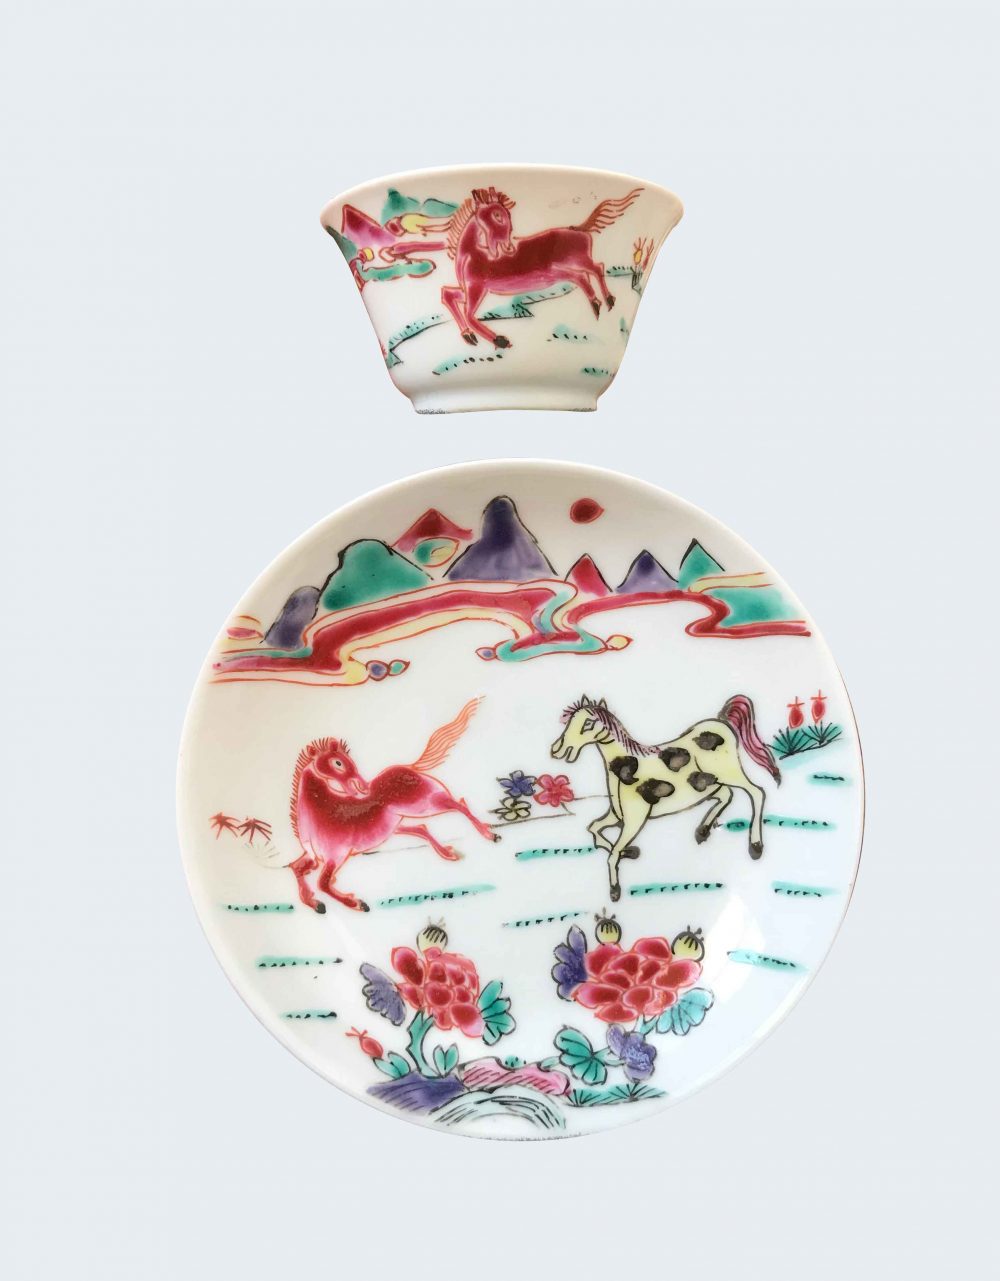 Famille rose Porcelain Yongzheng (1723-1735), China 